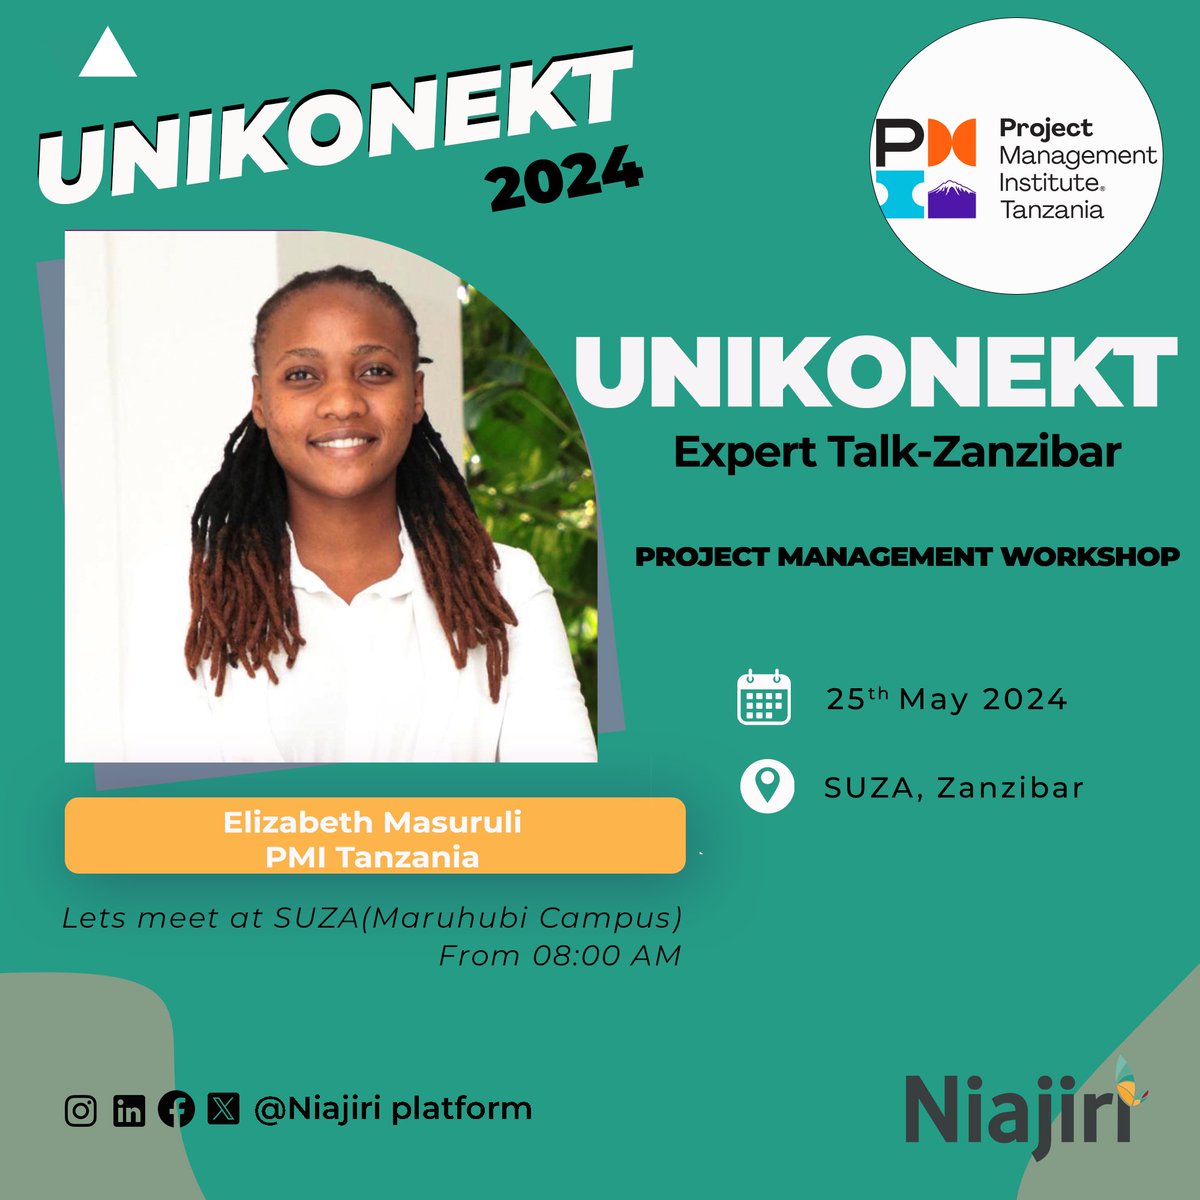 UNIKONEKT Expert Talk from Zanzibar!✍️
1️⃣ Digital literacy workshop @DOTTanzania
2️⃣ Project Management workshop by @PMInstitute 

#Unikonekt2024 #Niajiritz